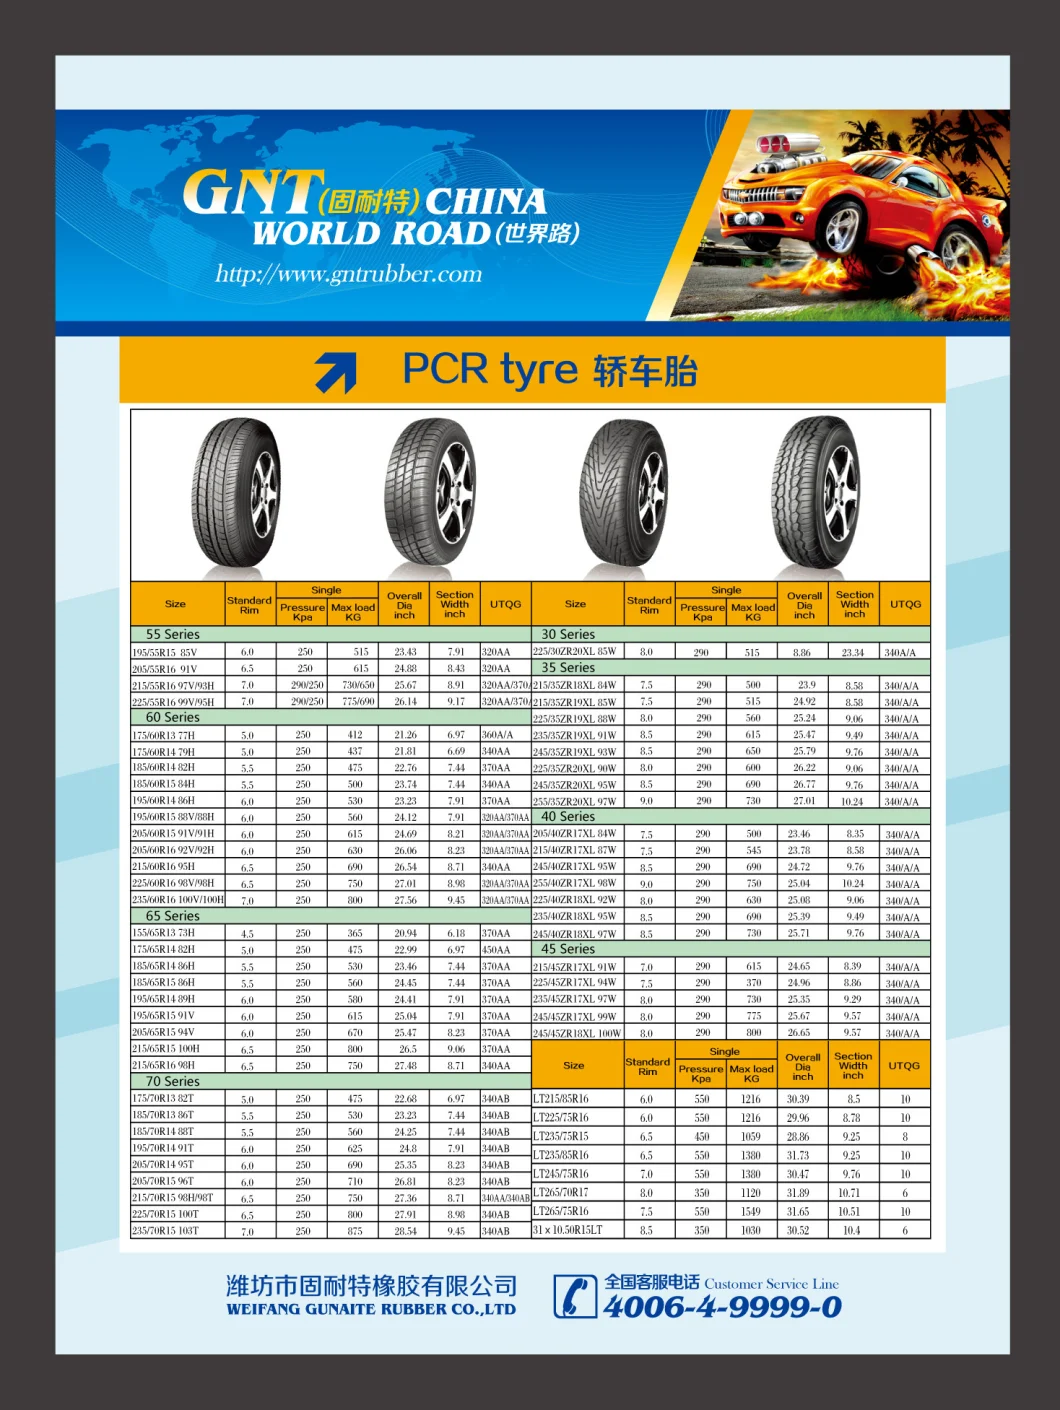 Passenger Tire Car Tire PCR Tire Passenger Car Tire (235/35ZR19, 245/35ZR19)